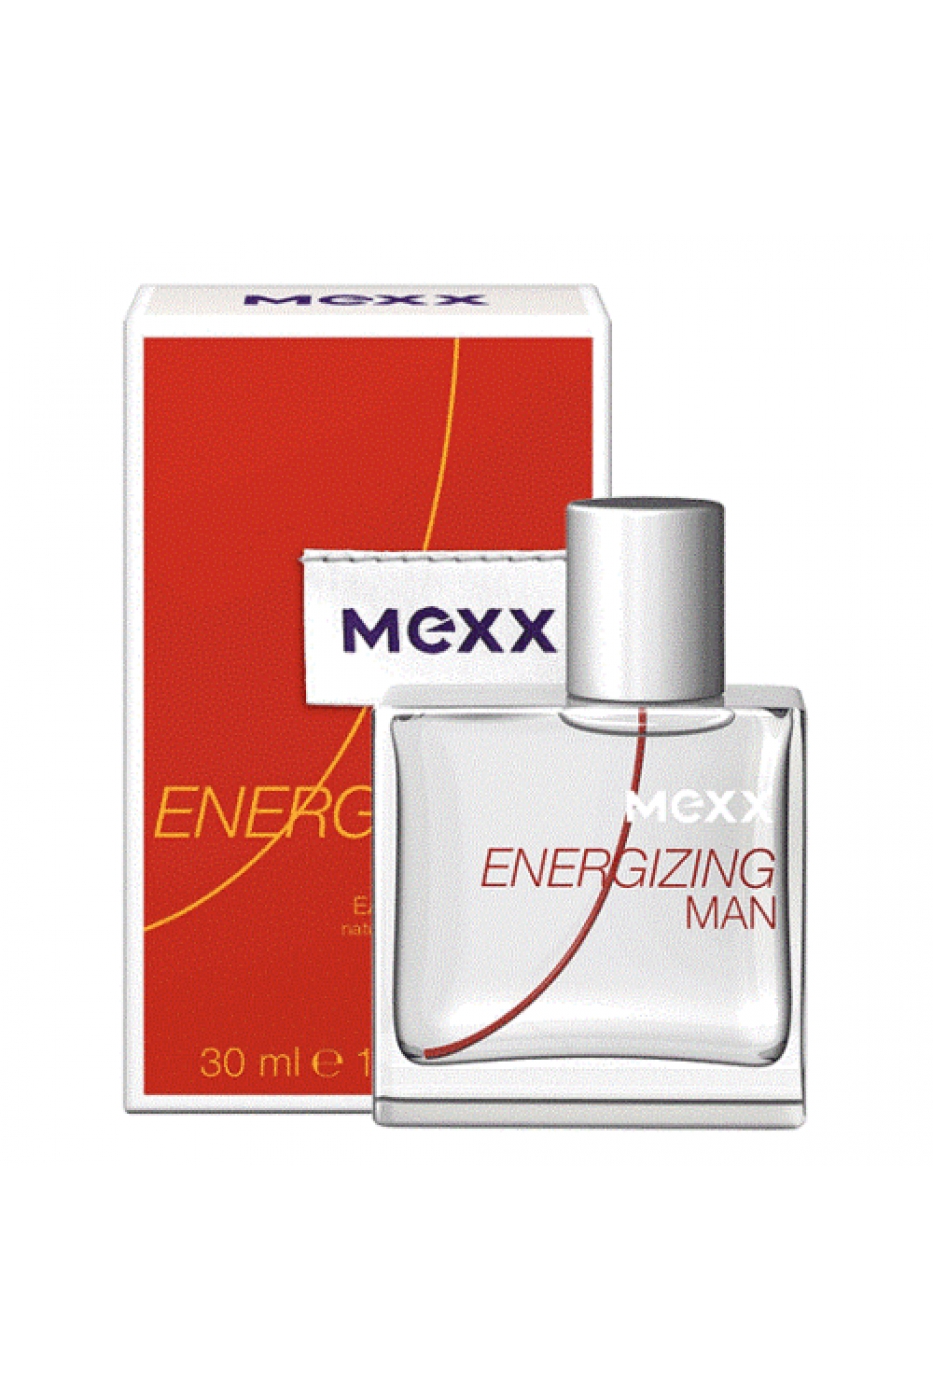 MEXX ENERGIZING MAN